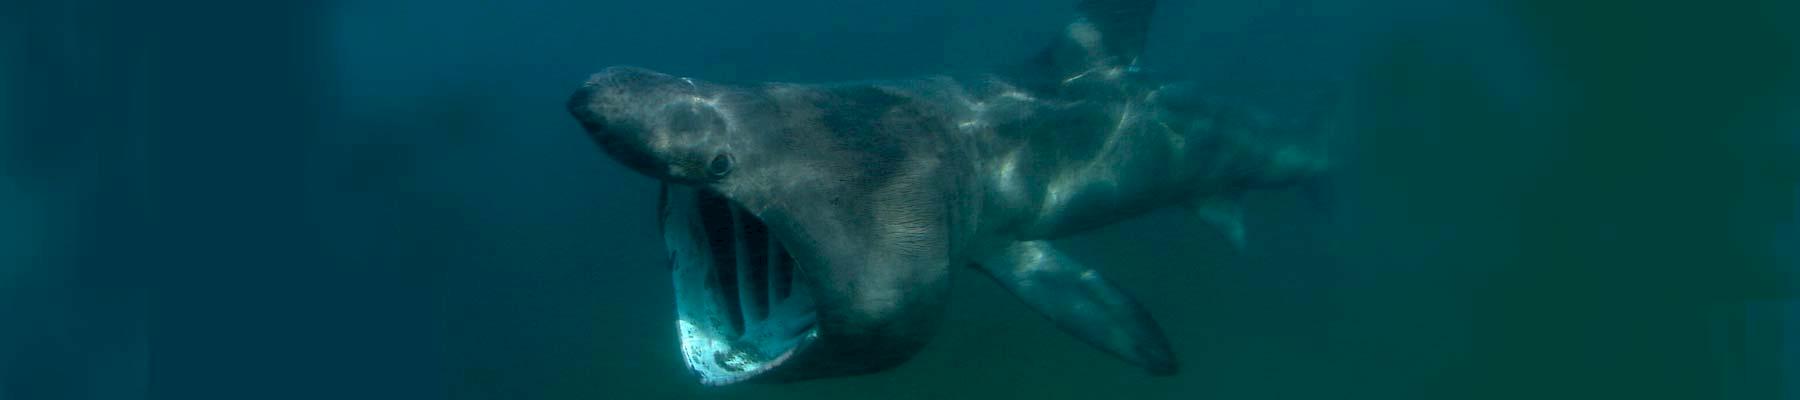 Basking Shark © Florian Graner / WWF